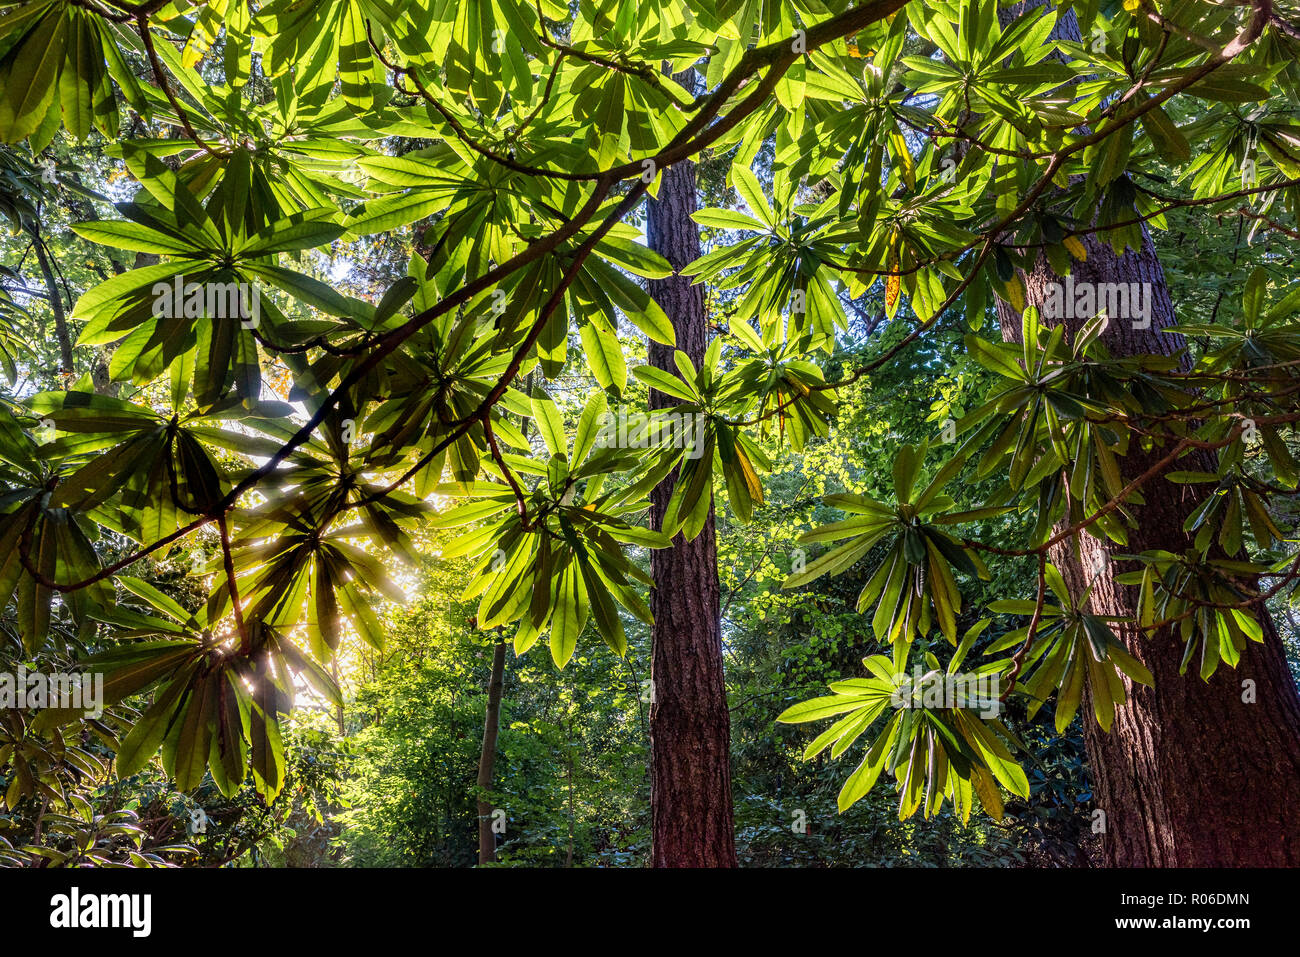 Tree with palmate leaves, VanDusen Botanical Garden, Vancouver, British Columbia, Canada Stock Photo